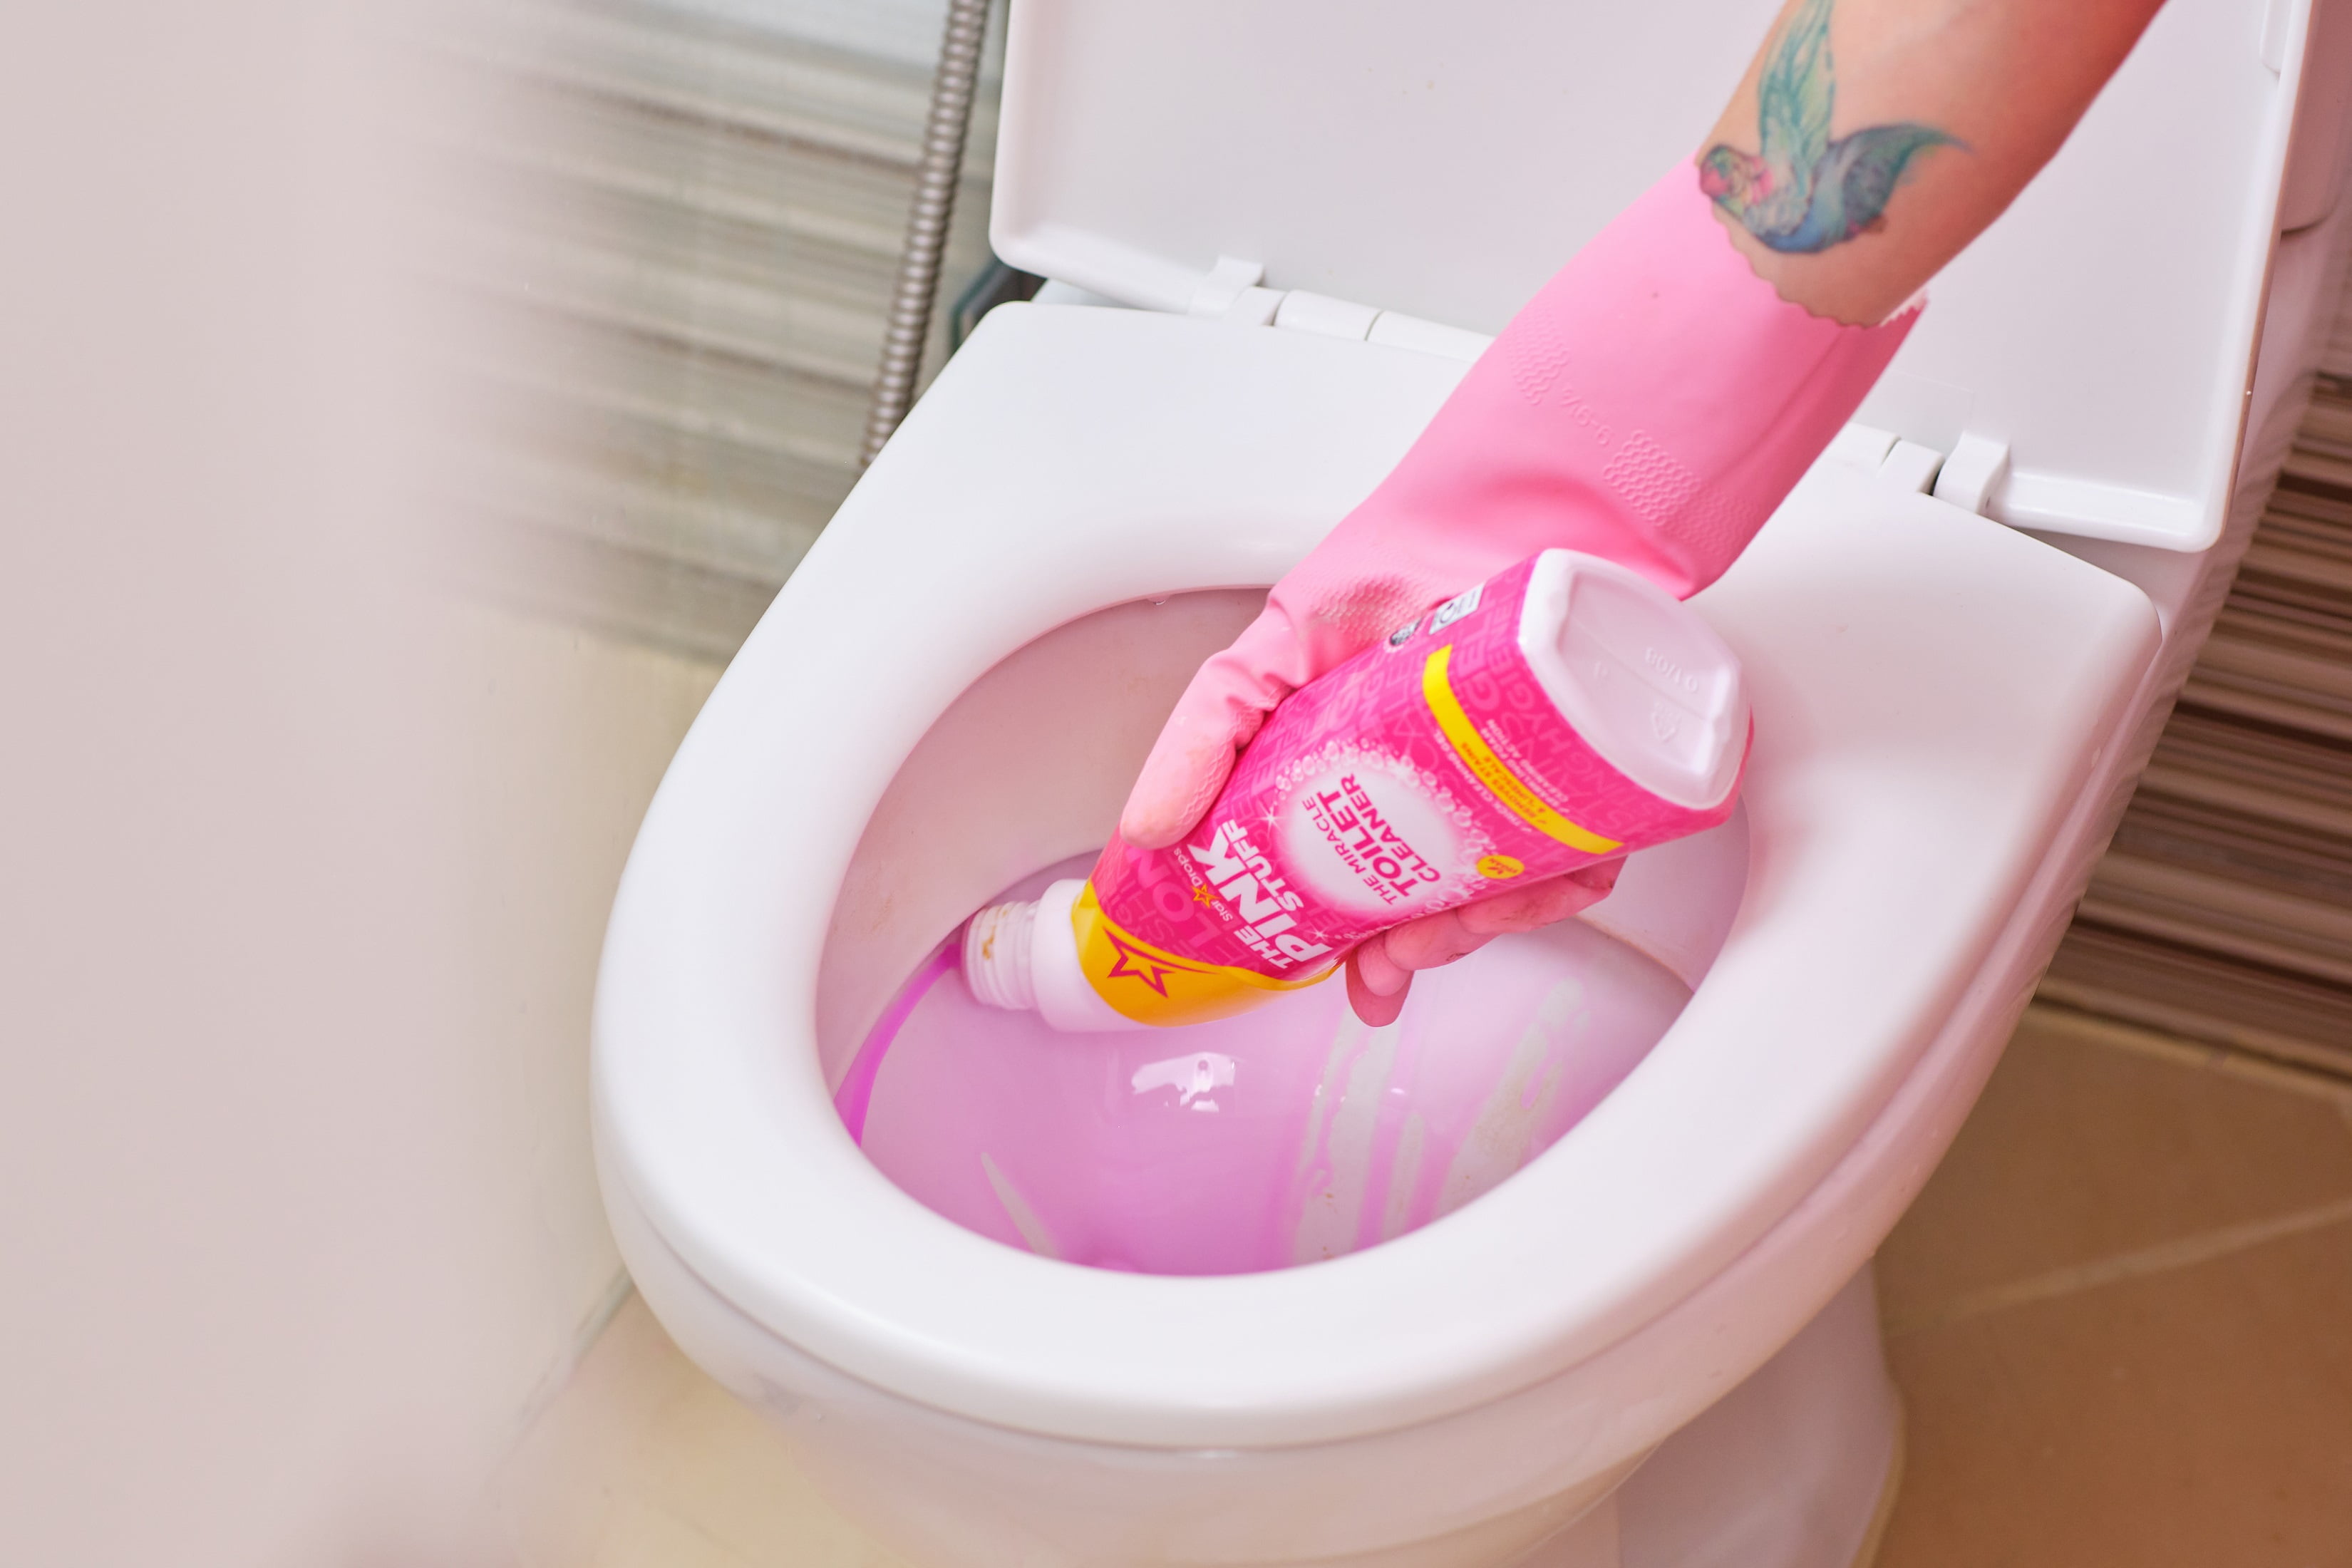 Pink stuff toilet cleaner 750ml 4000